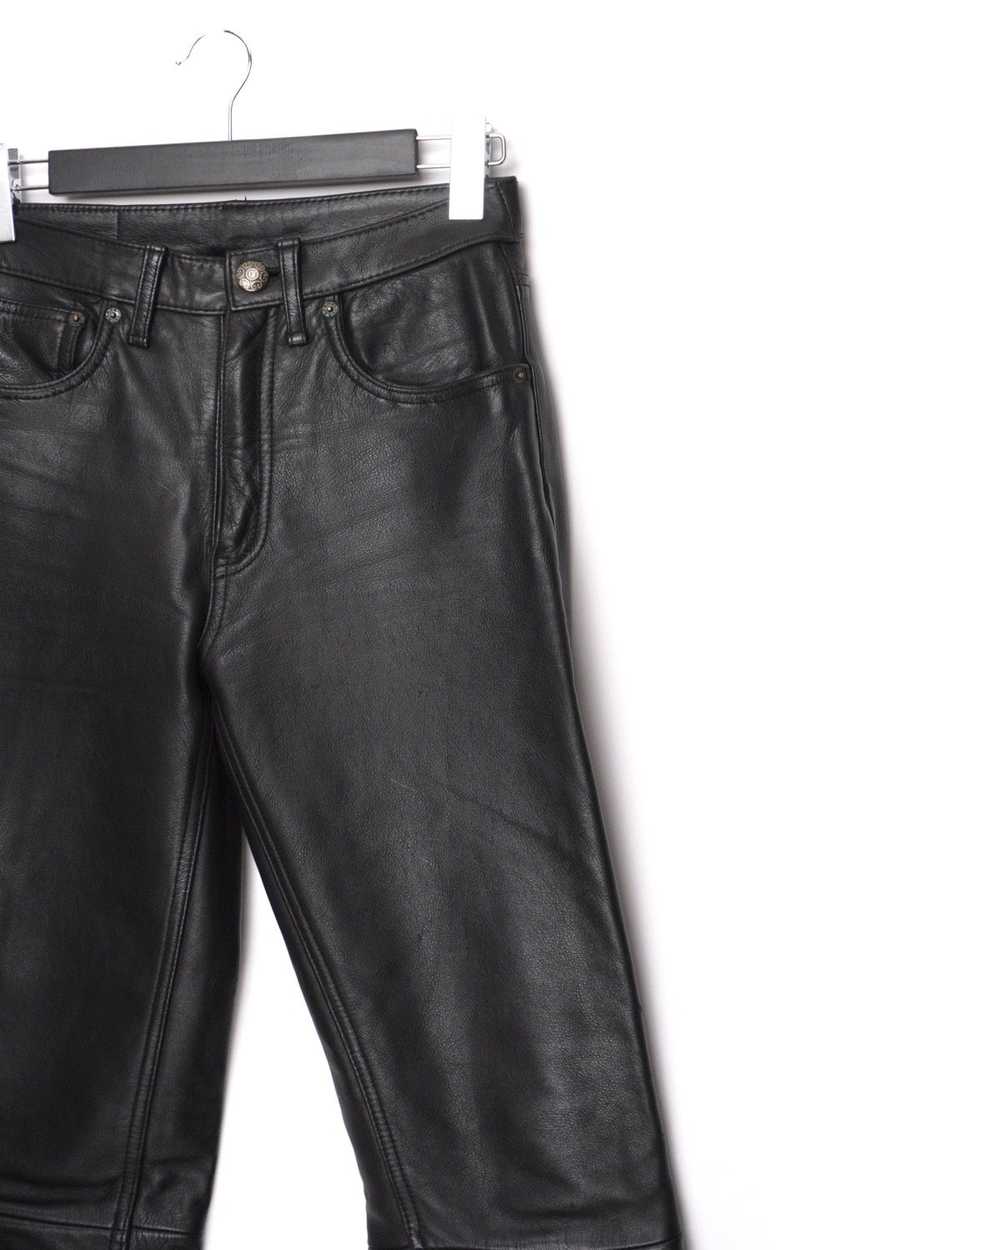 Levi's Vintage Levi’s Genuine Leather Black Pants - image 3